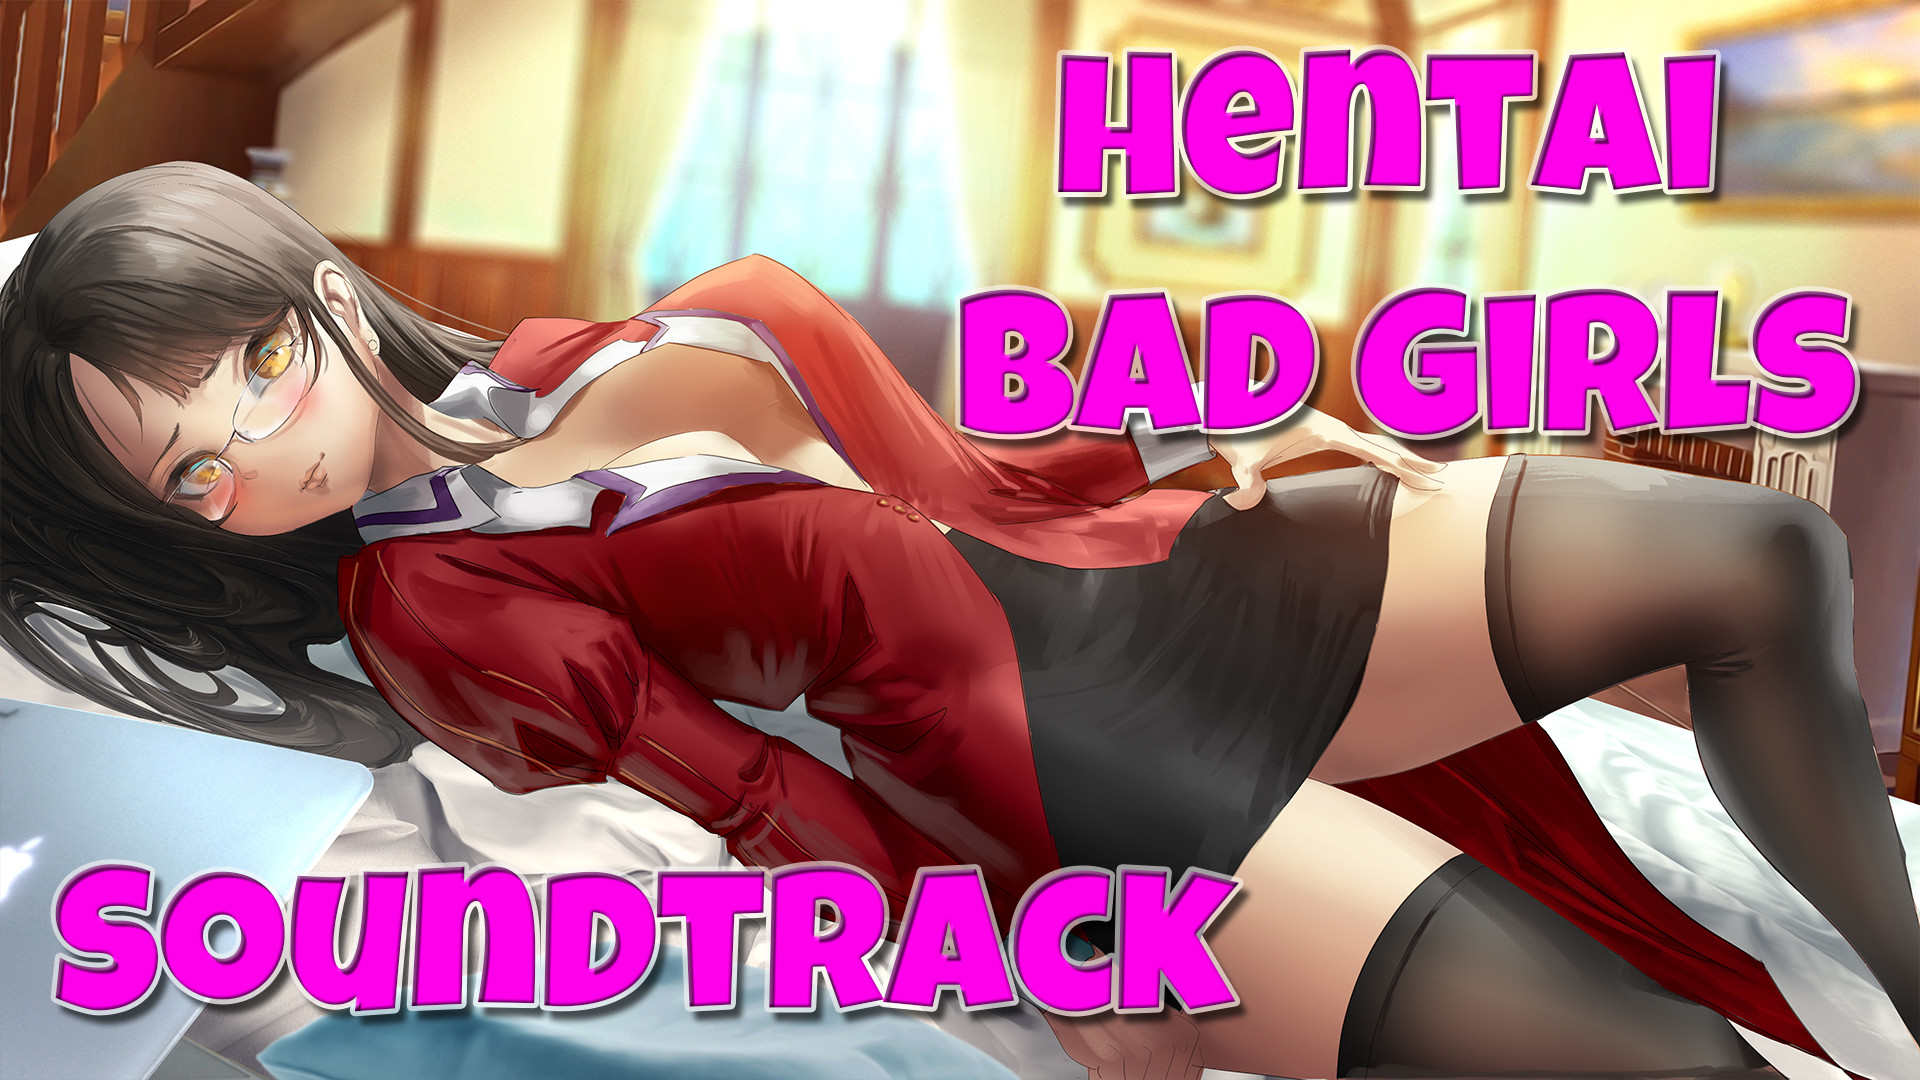 Hentai Bad Girls - Soundtrack Featured Screenshot #1